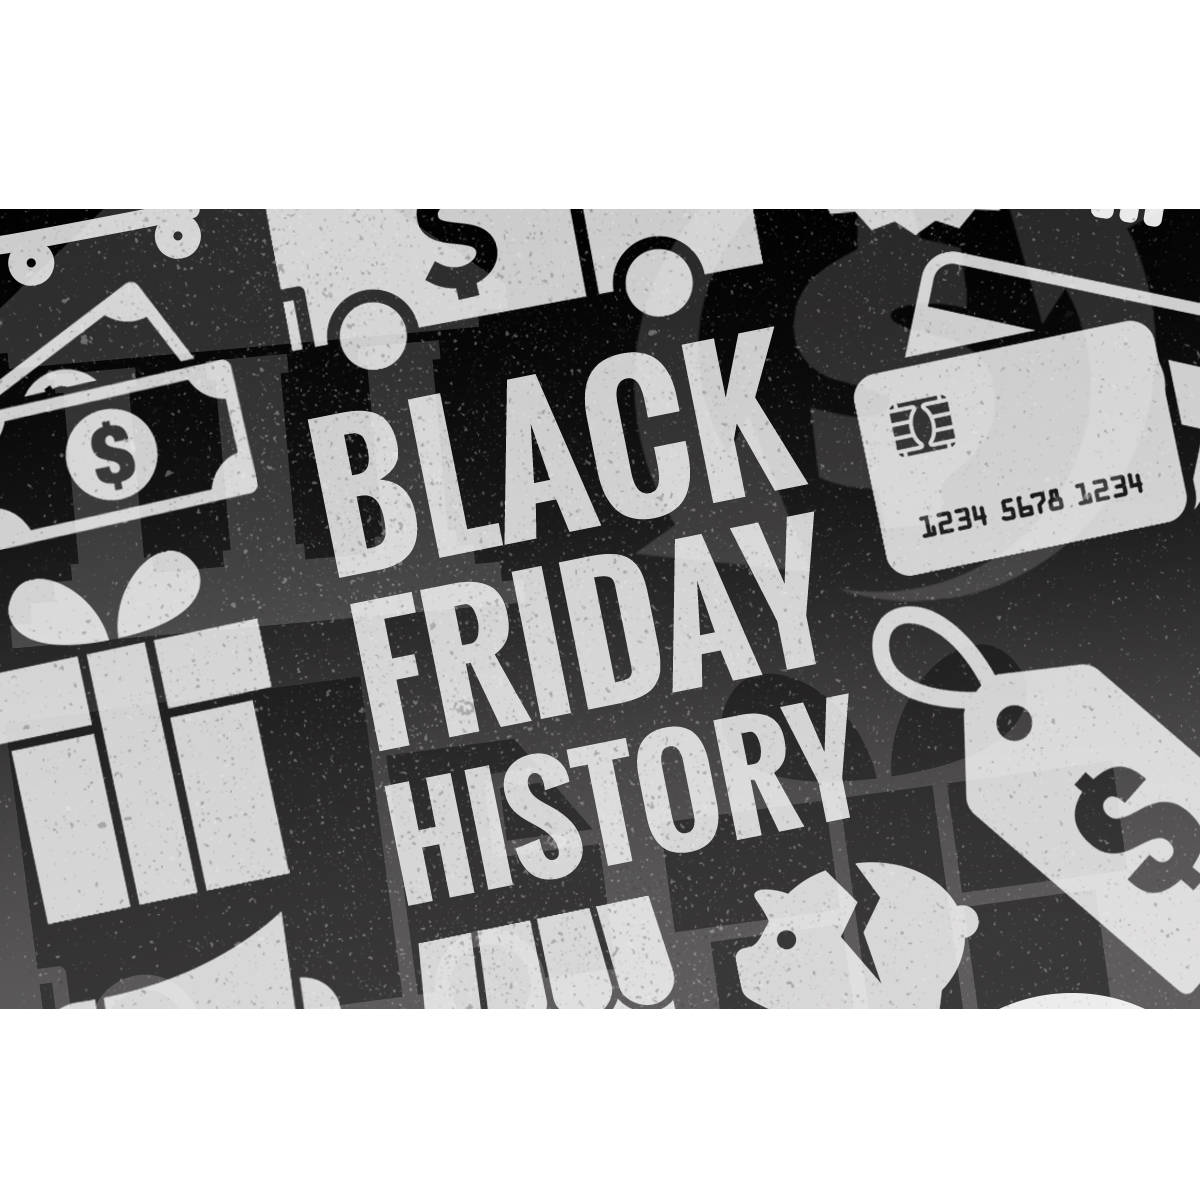 Black Friday Online Sales